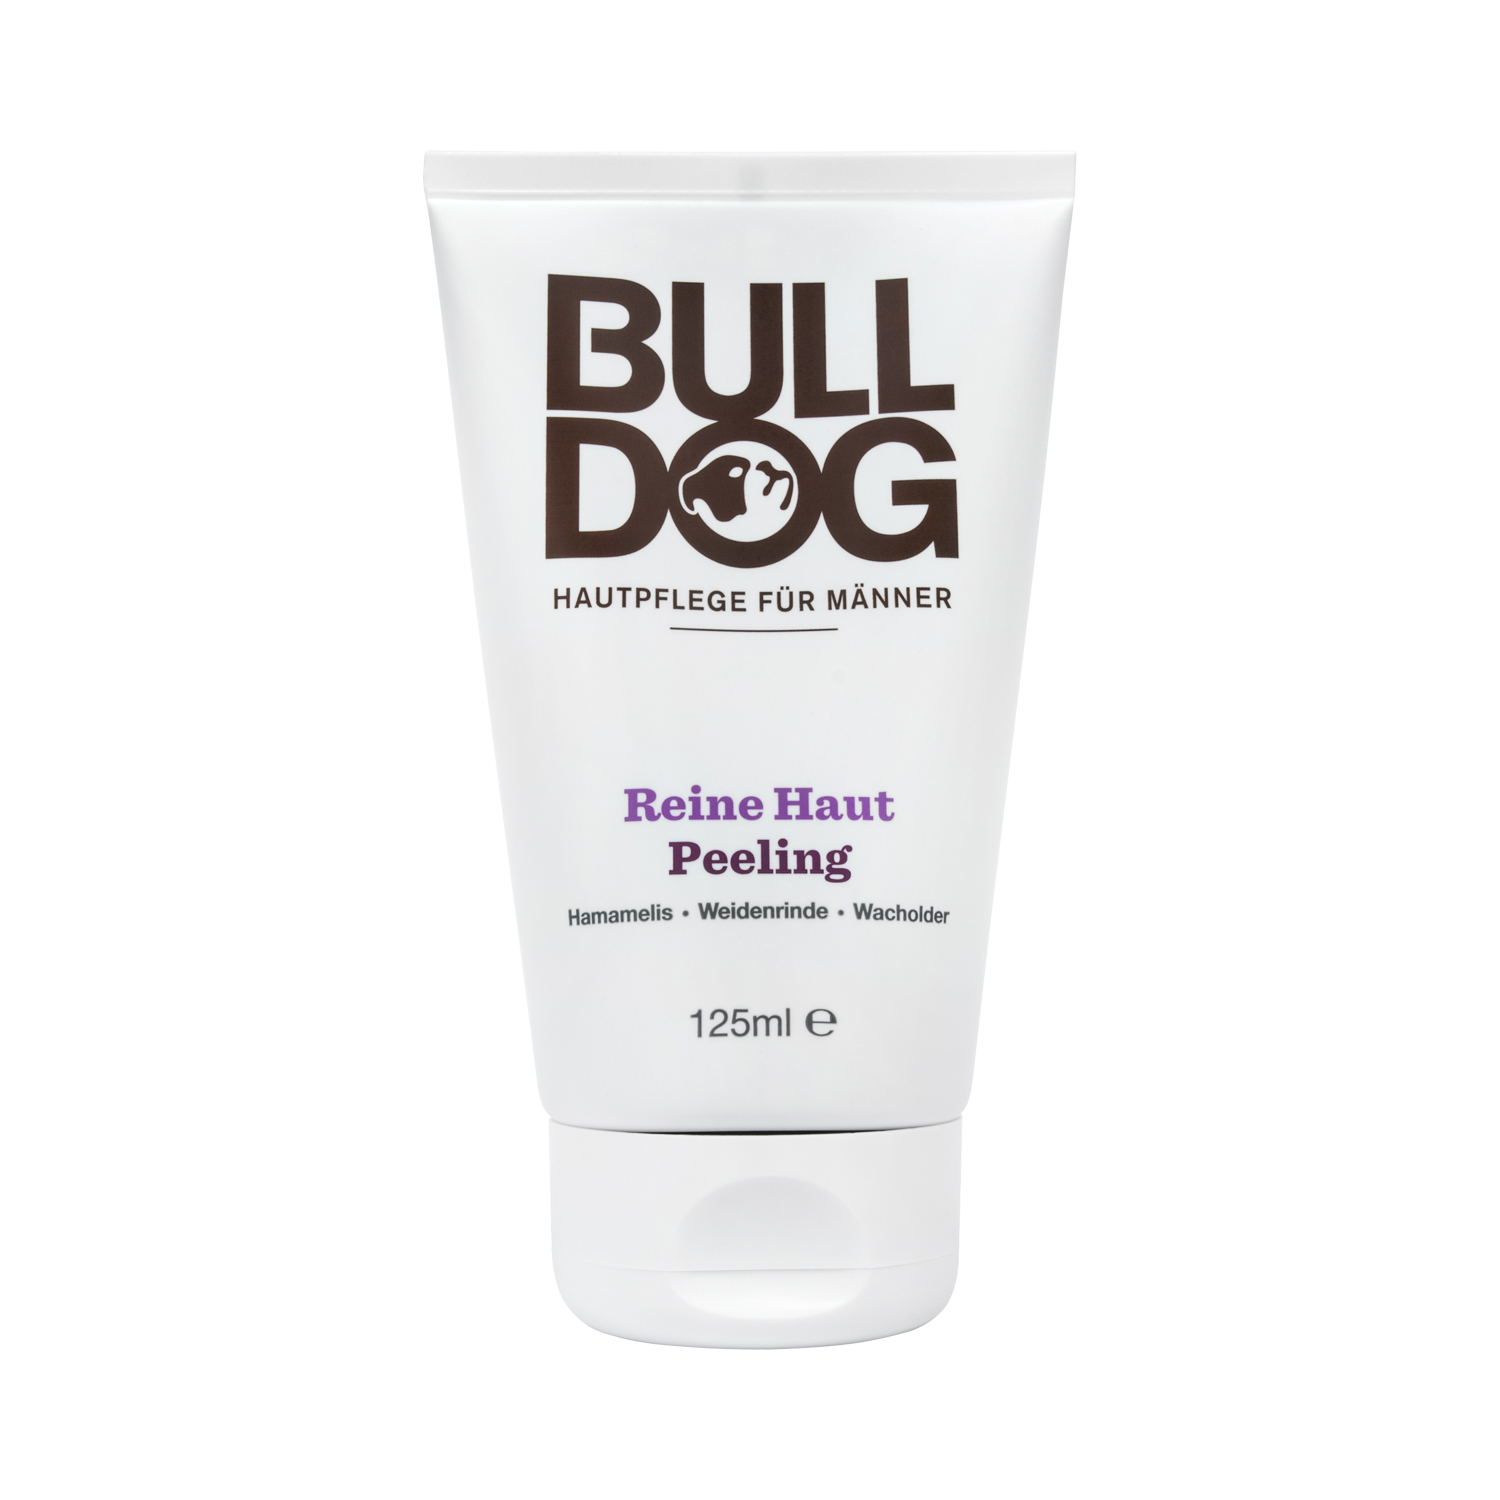 Bulldog - Reine Haut Peeling